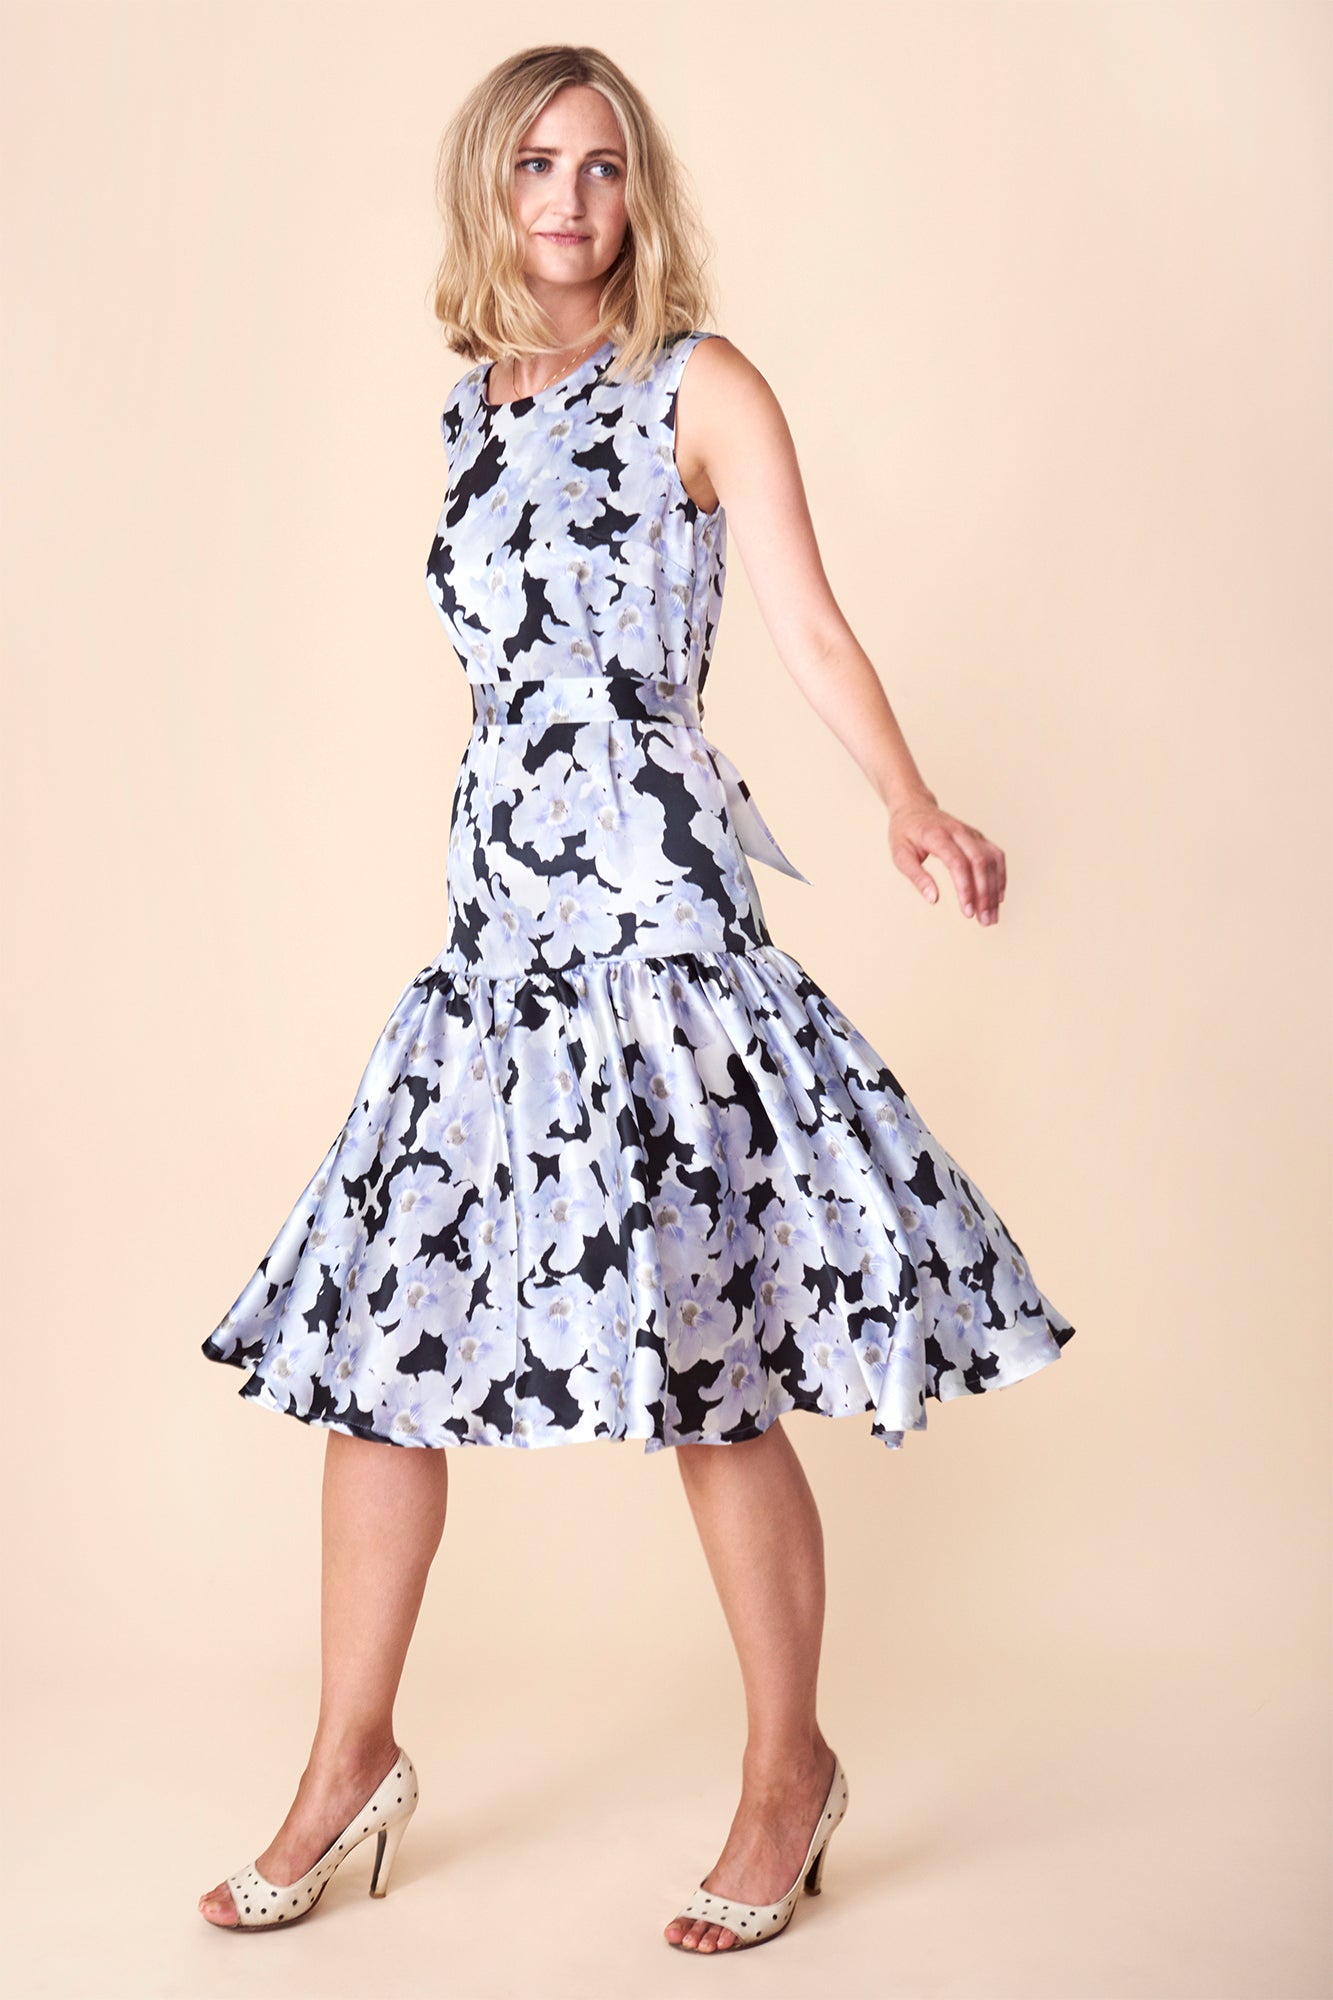 Choosing fabrics for your Eloise Dress